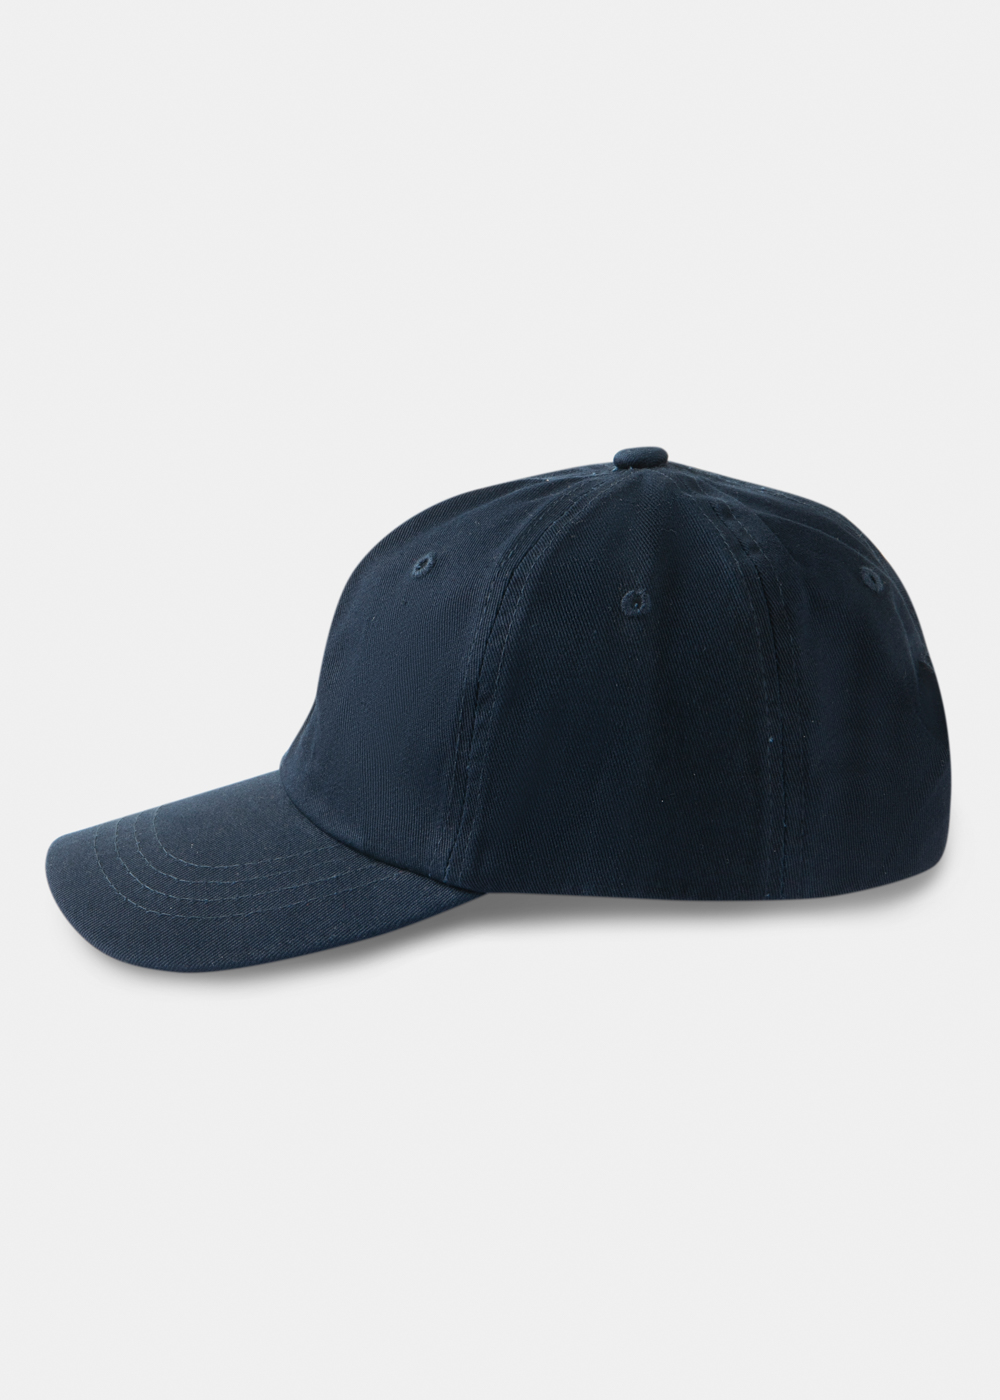 Navy Blue Soft Cap